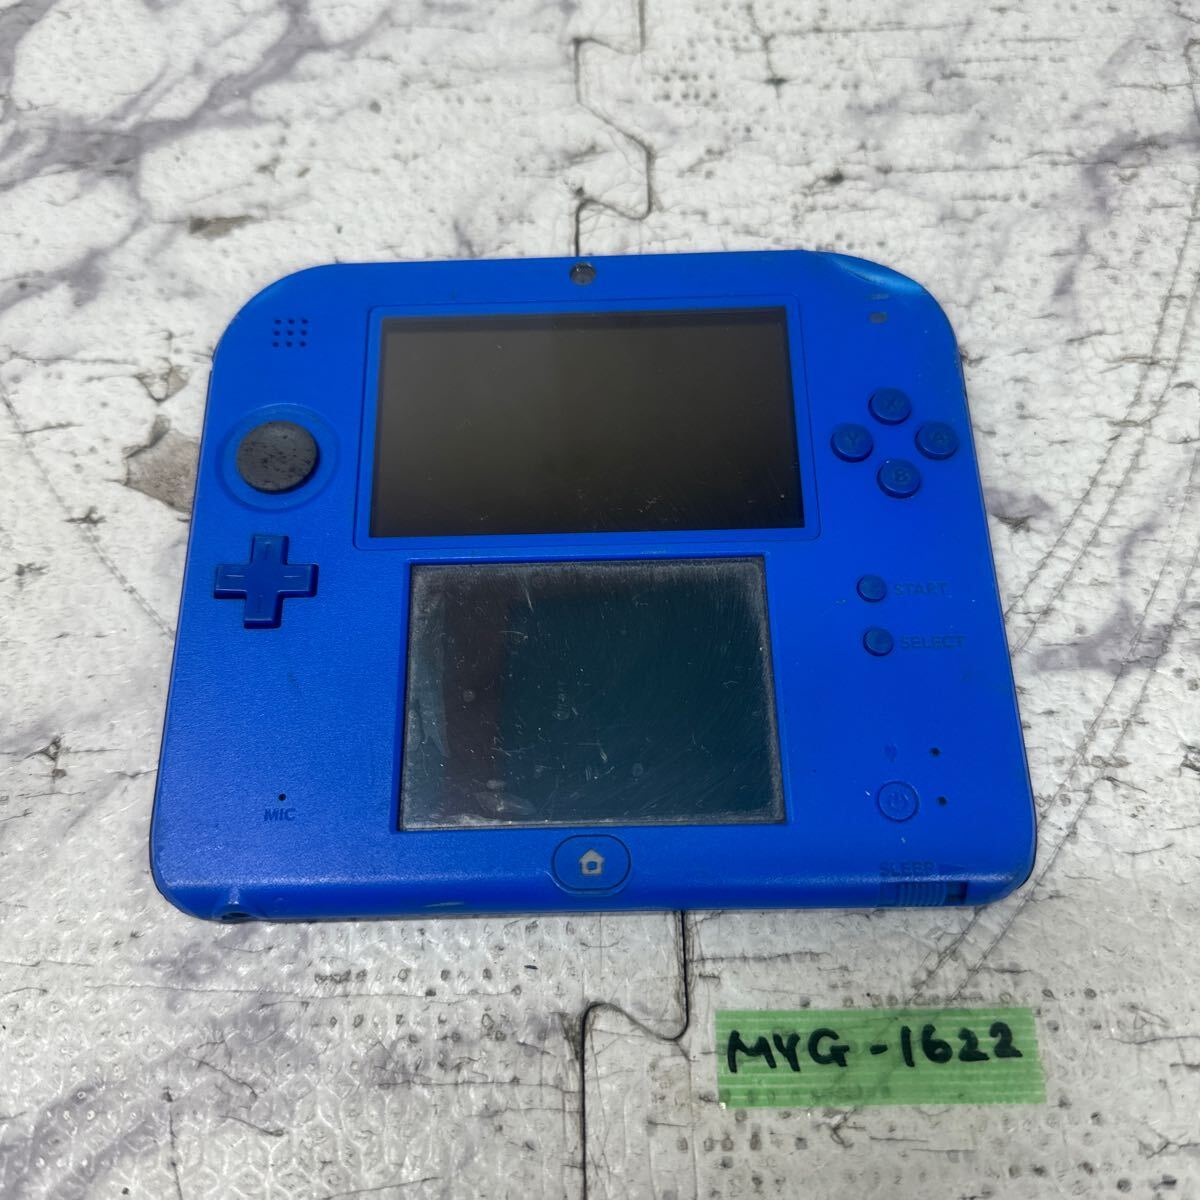 MYG-1622 激安 ゲー厶機 2DS 本体 Nintendo 2DS 動作未確認 ジャンク 同梱不可の画像1